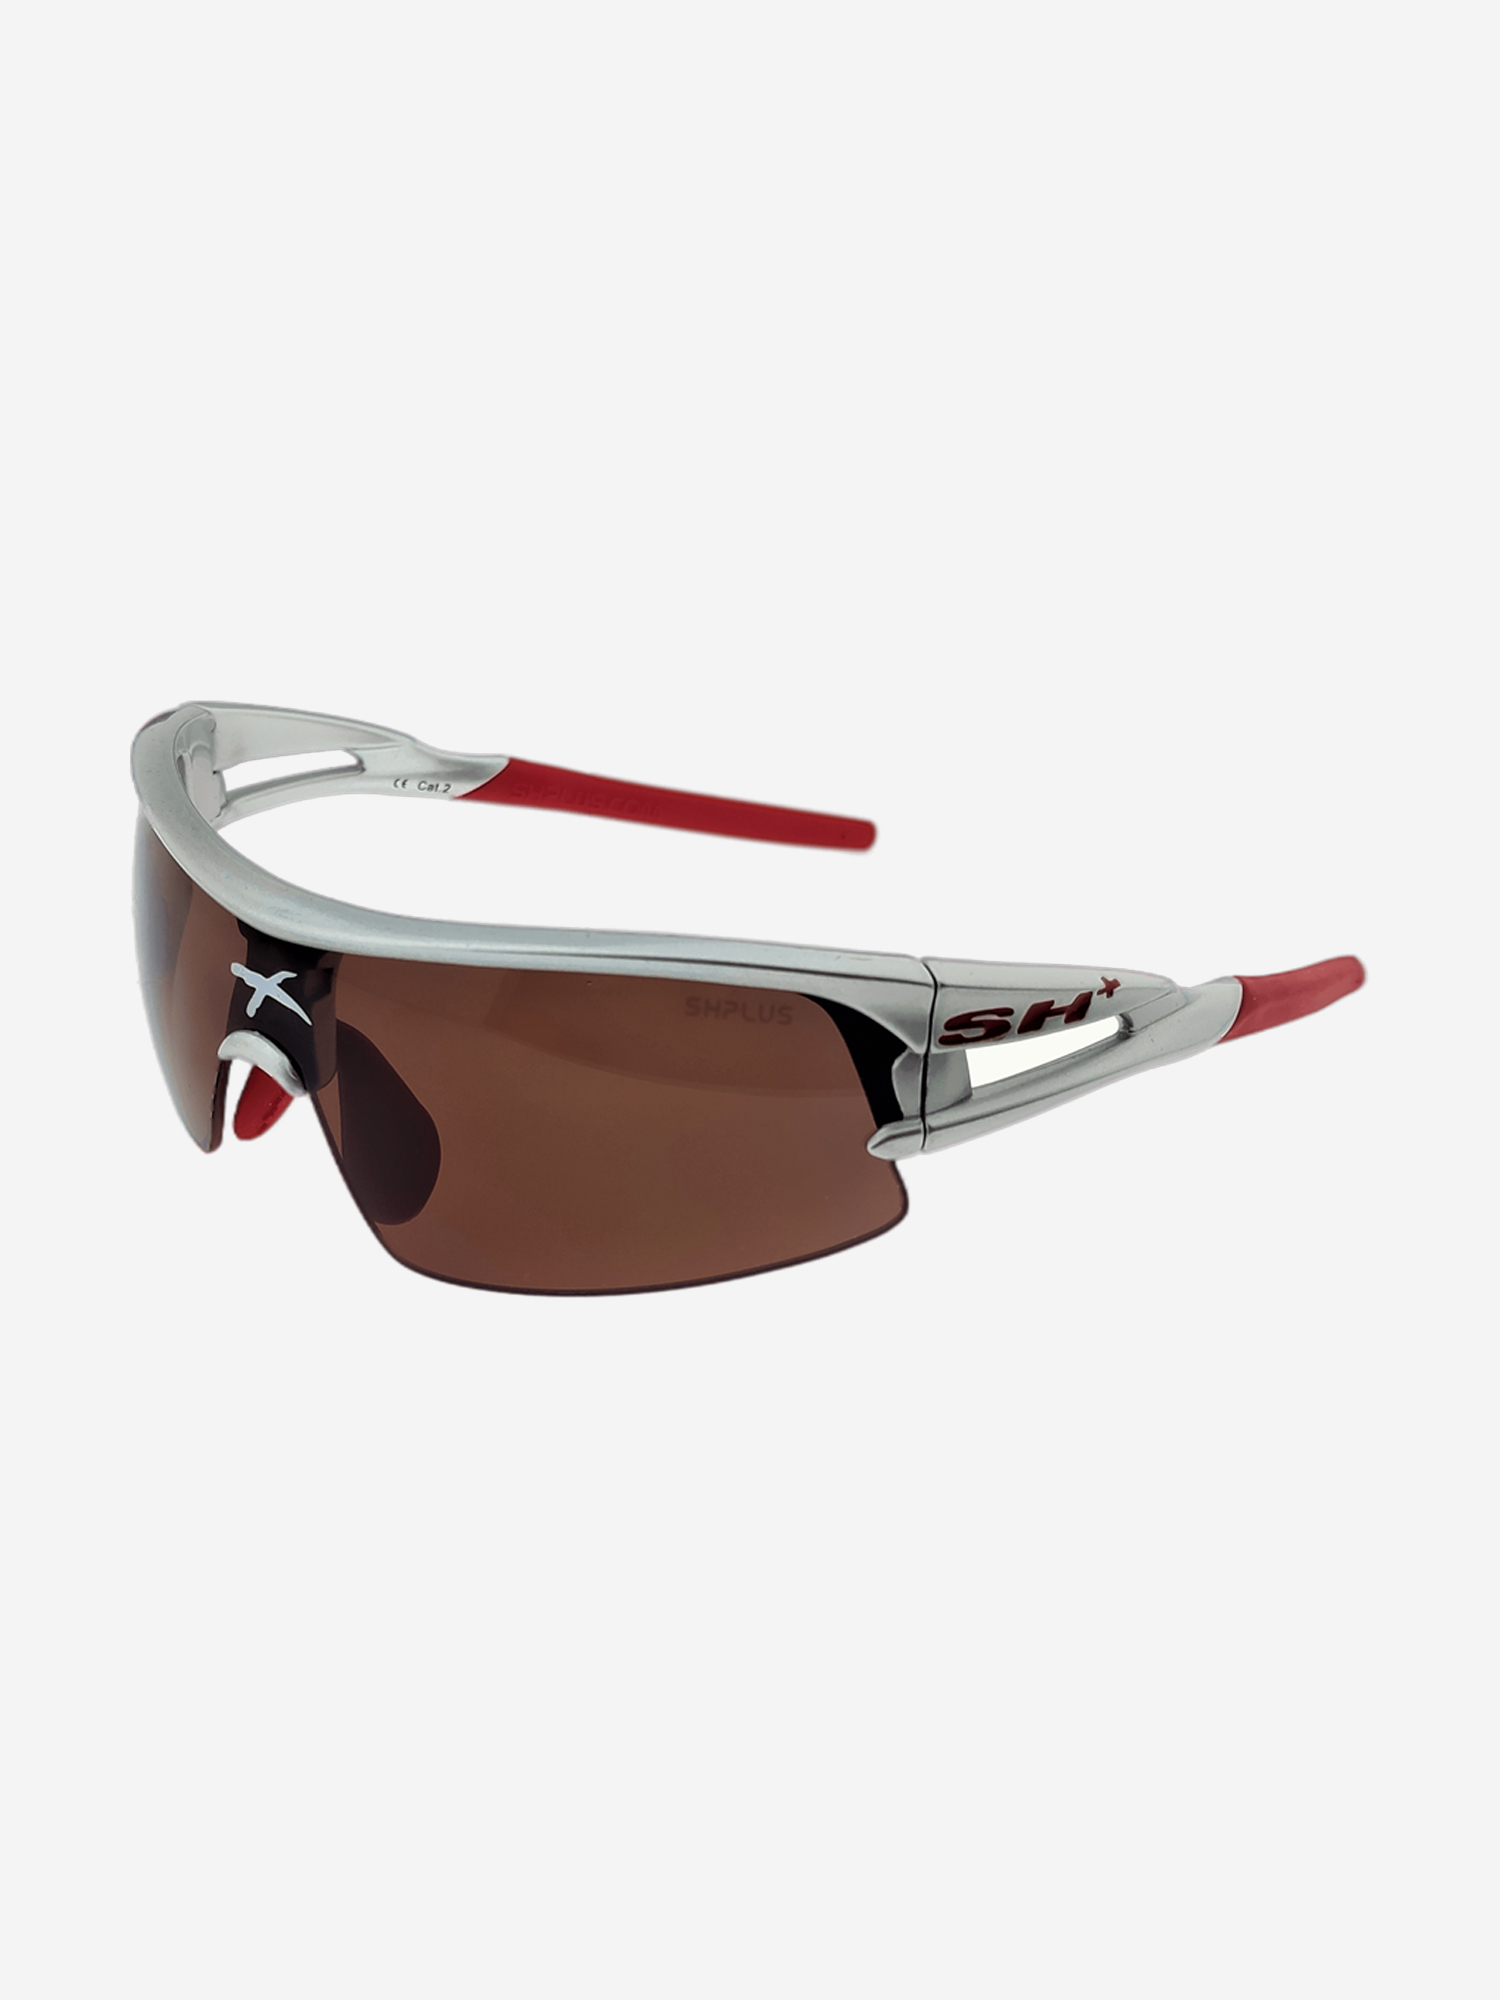 Спортивные очки SH+ RG 4600 Small Face Shiny silver/red polarized (+2 доп. линзы), Серебряный